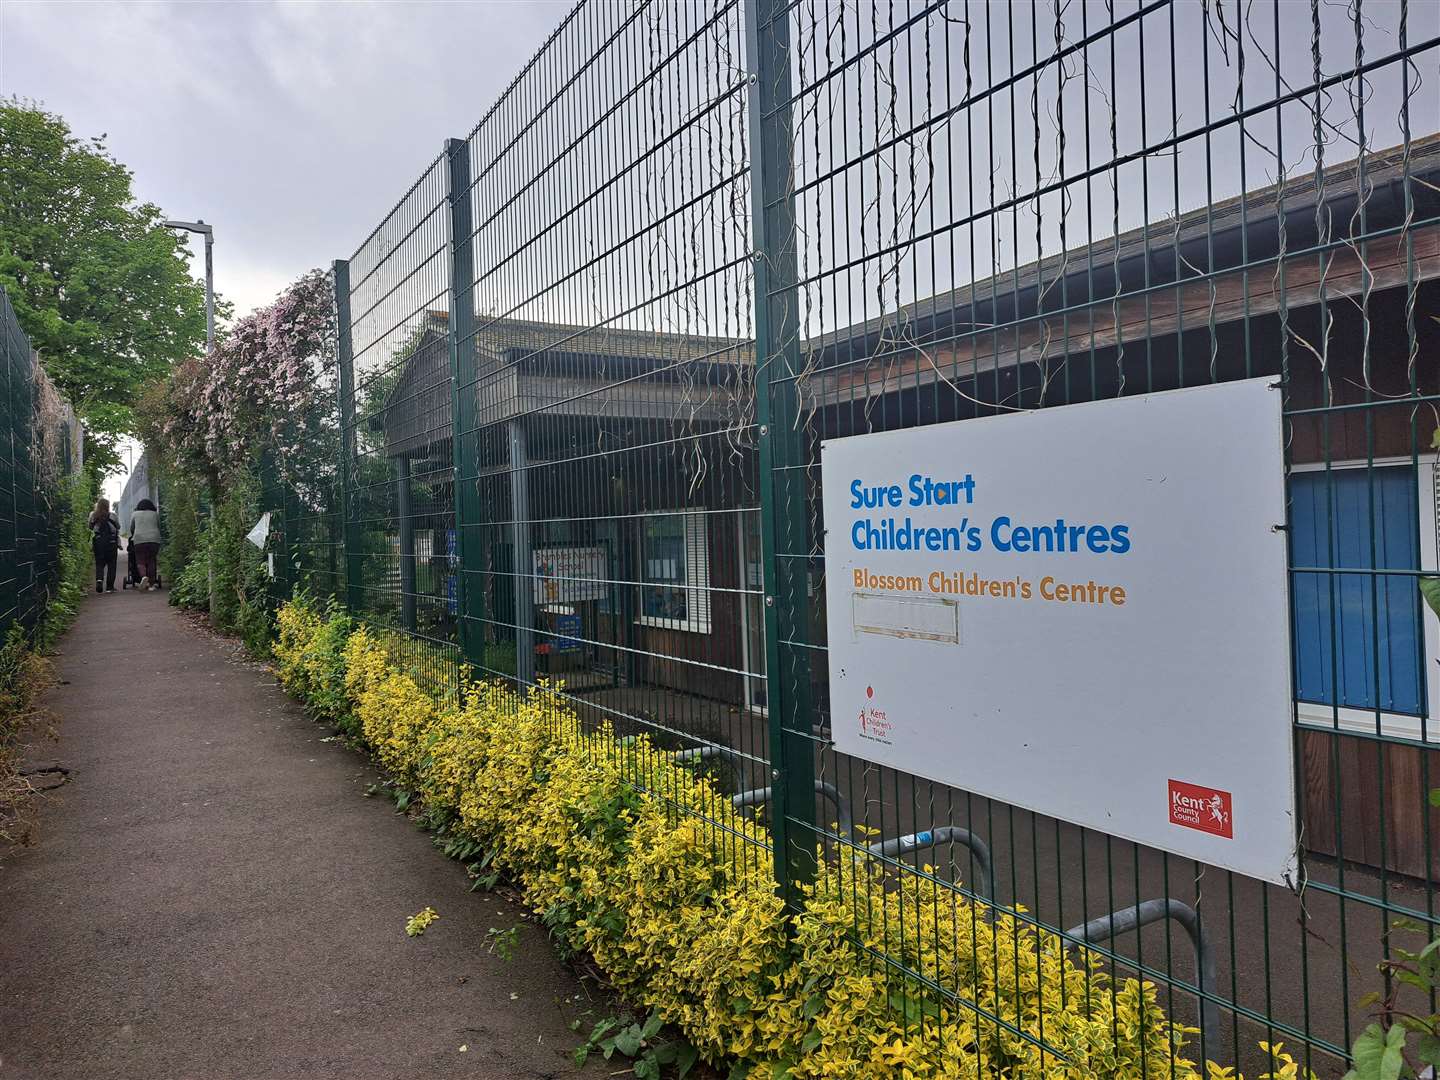 Blossom Children's Centre in Deal